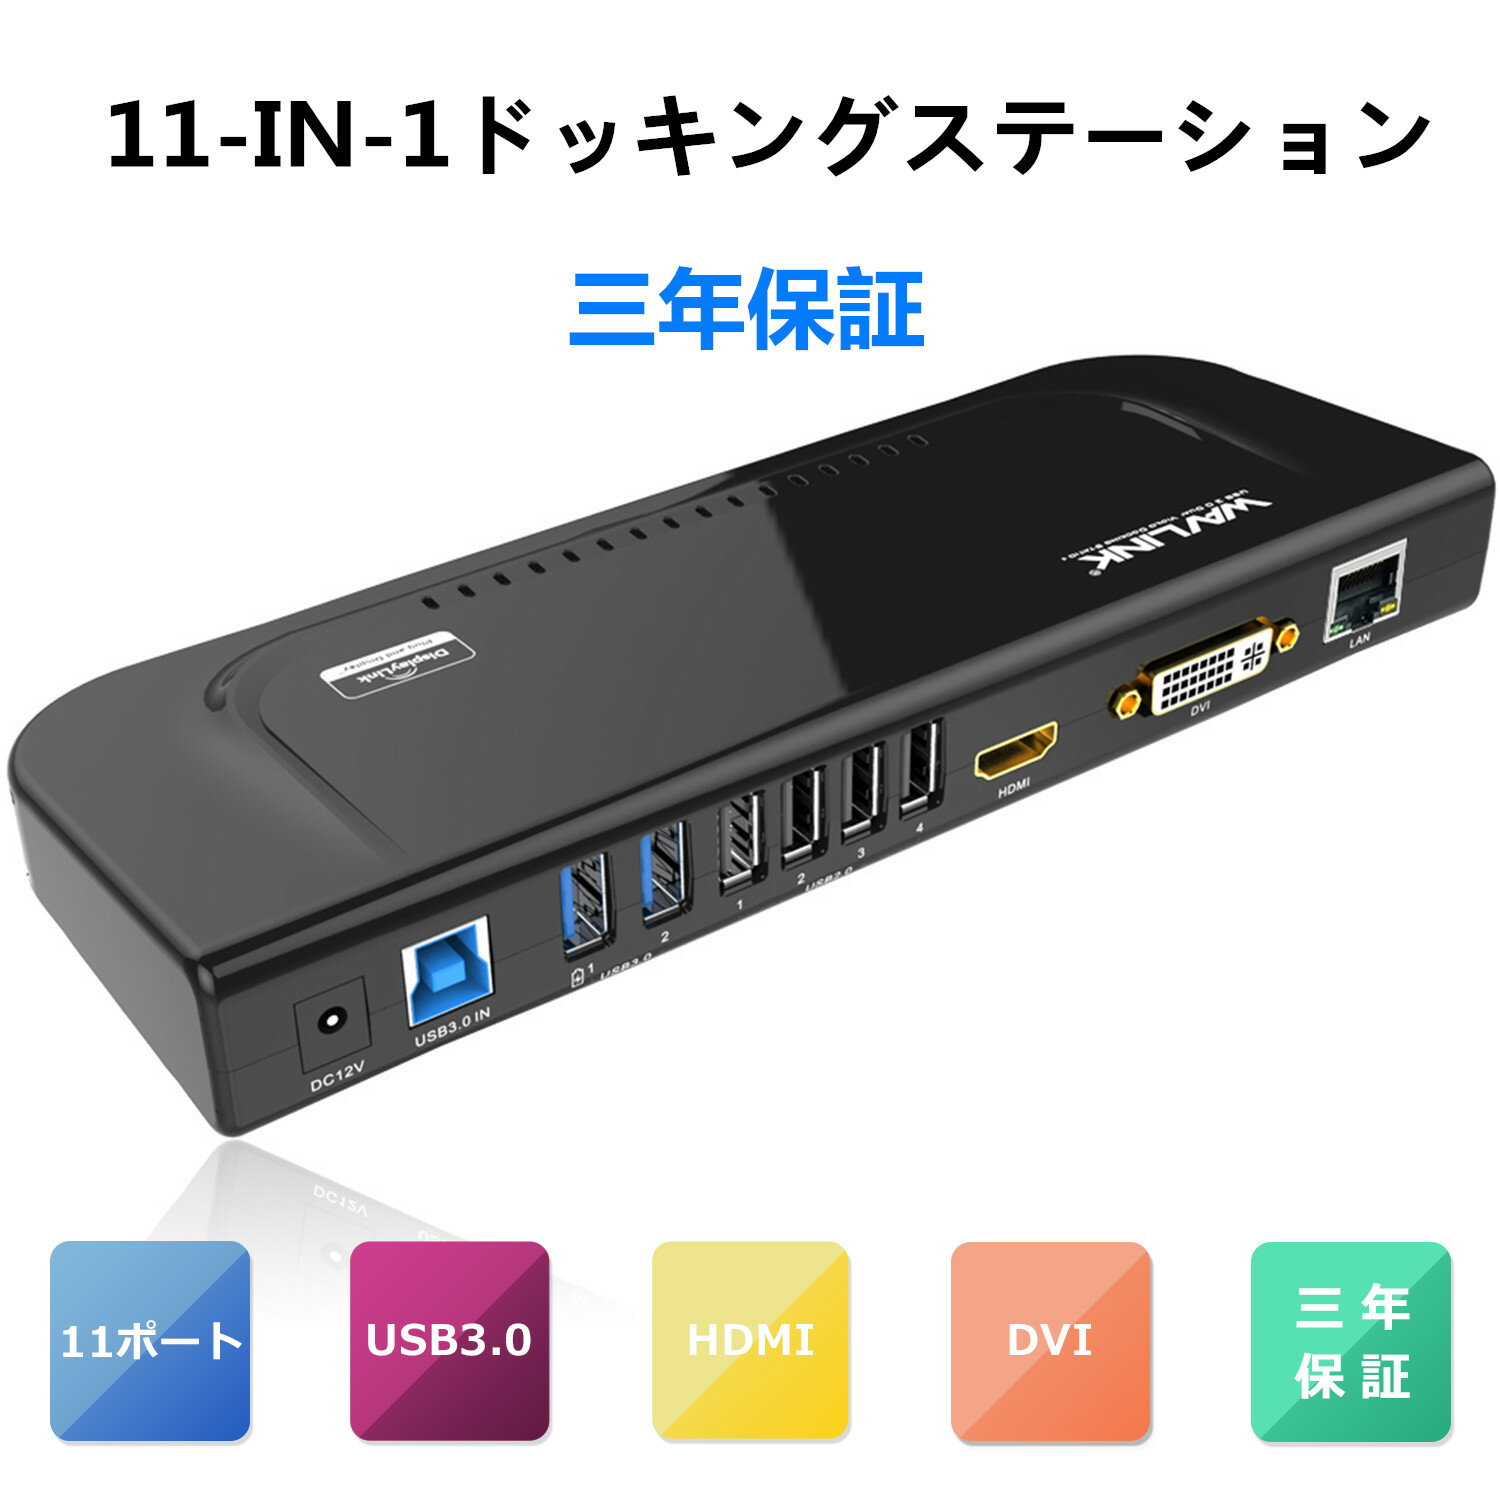 WAVLINK USB 3.0 hbLOXe[VEfA j^[HDMI DVI VGA |[g MKrbg C[TlbgAI[fBI@USB 3.0 |[gx2AUSB 2.0|[gx4ó@ō𑜓x2048x1152@dA_v^[t